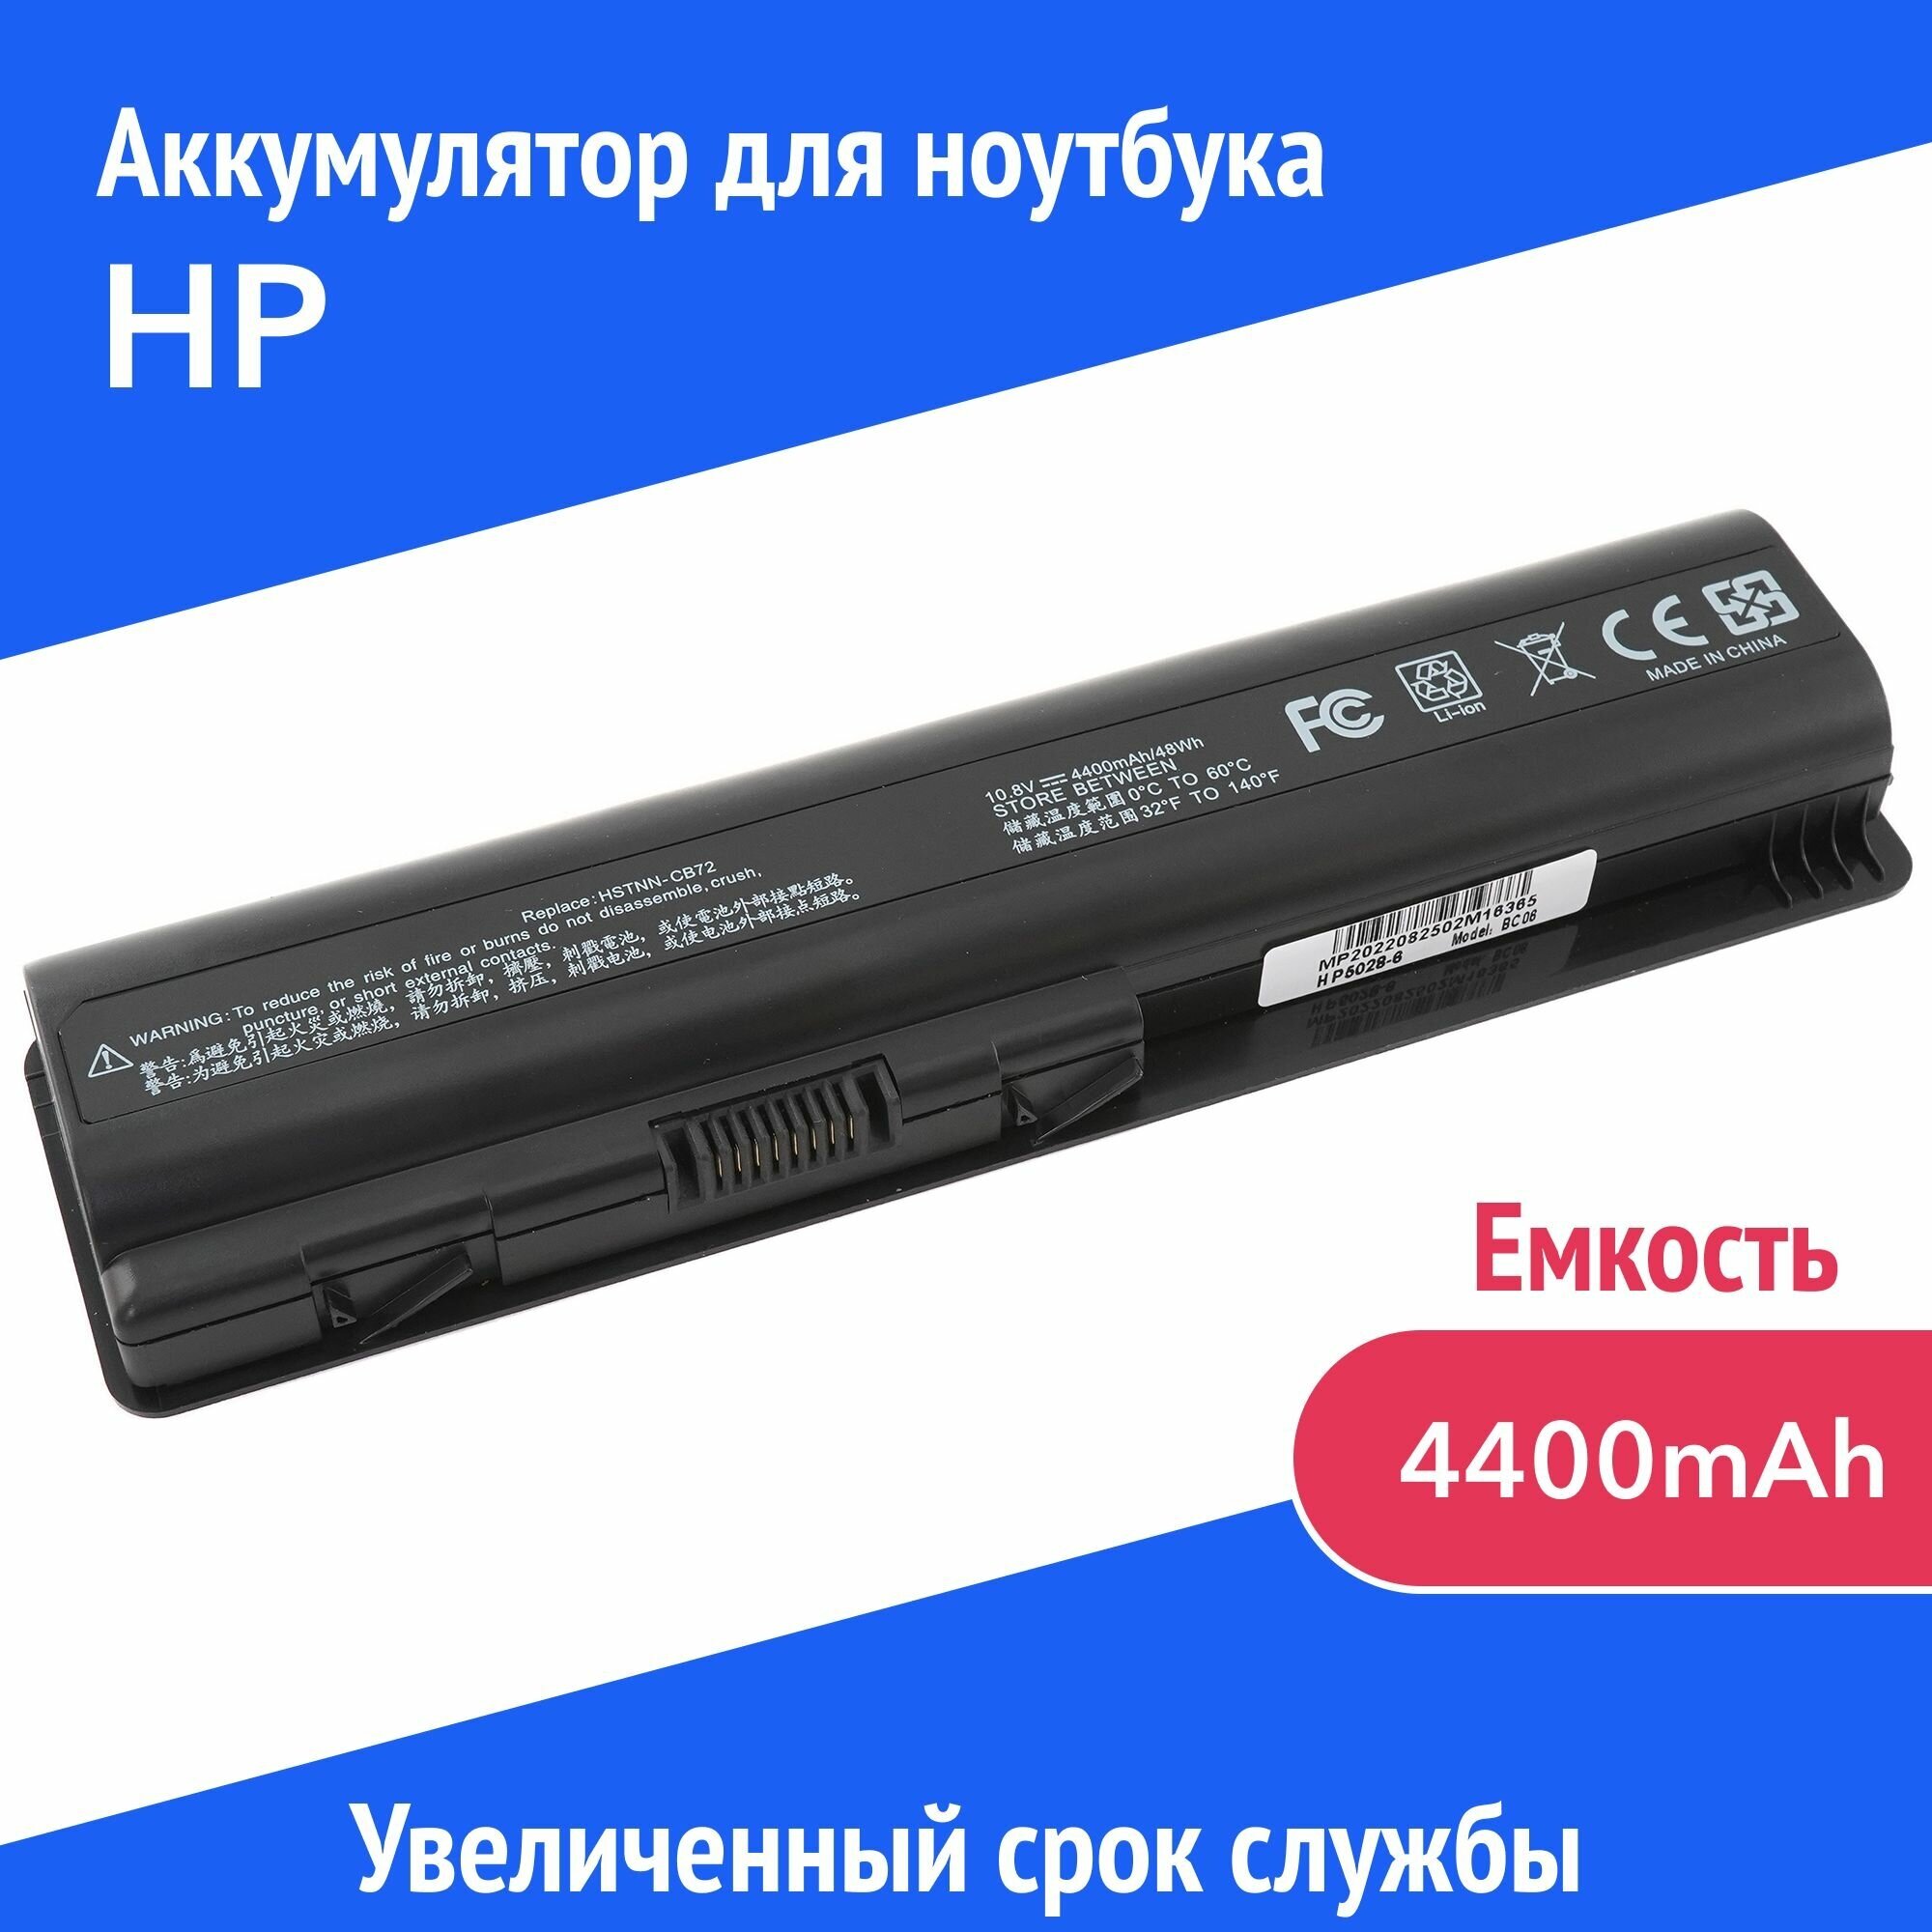 Аккумулятор HSTNN-LB72 для HP Pavilion dv4 / dv6 / G71 / Compaq Presario CQ40 / CQ61 (KS524AA, NH493AA, HSTNN-CB72) 4400mAh